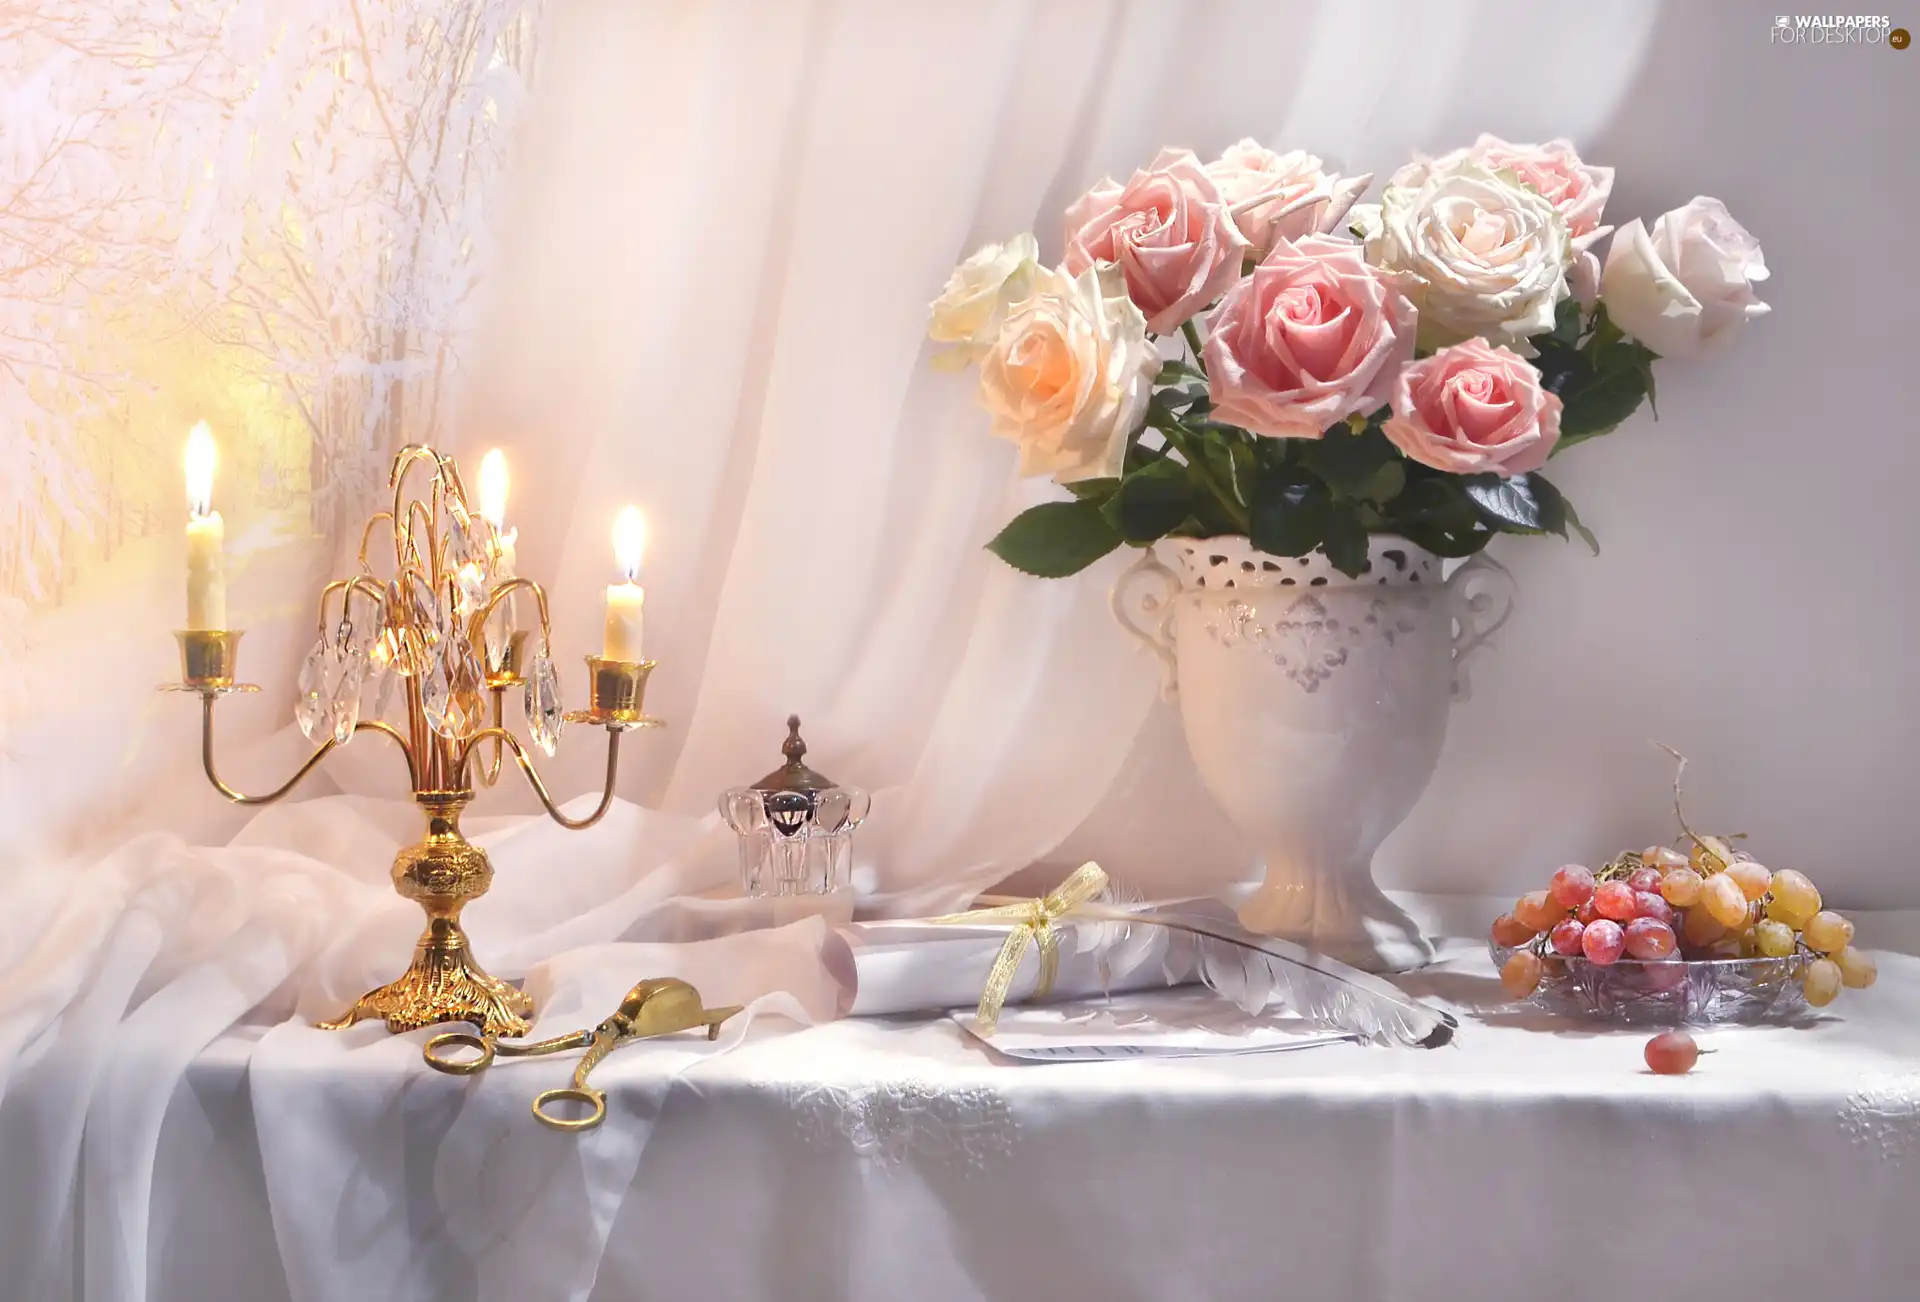 roses, Vase, Candles, bouquet, composition, candlestick, Grapes